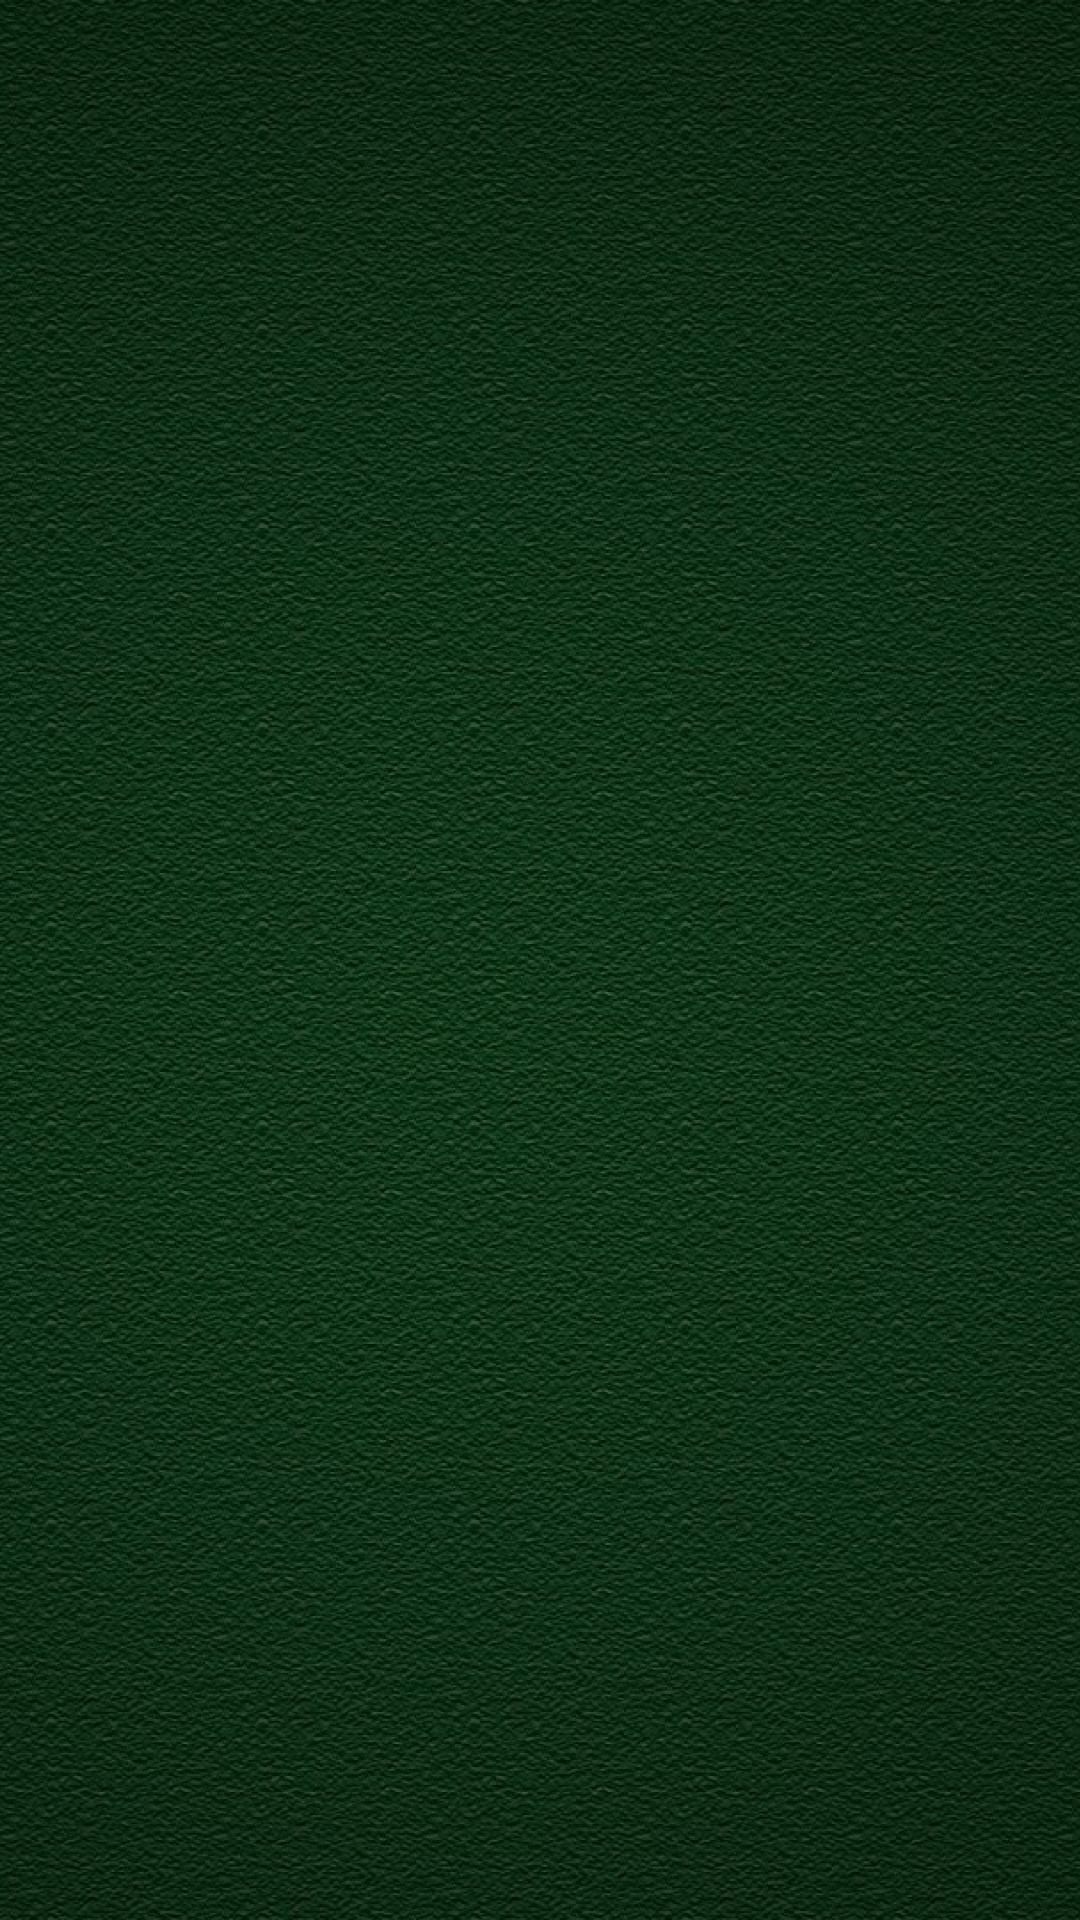 Dark Green Textures Wallpaper Photo Shared By